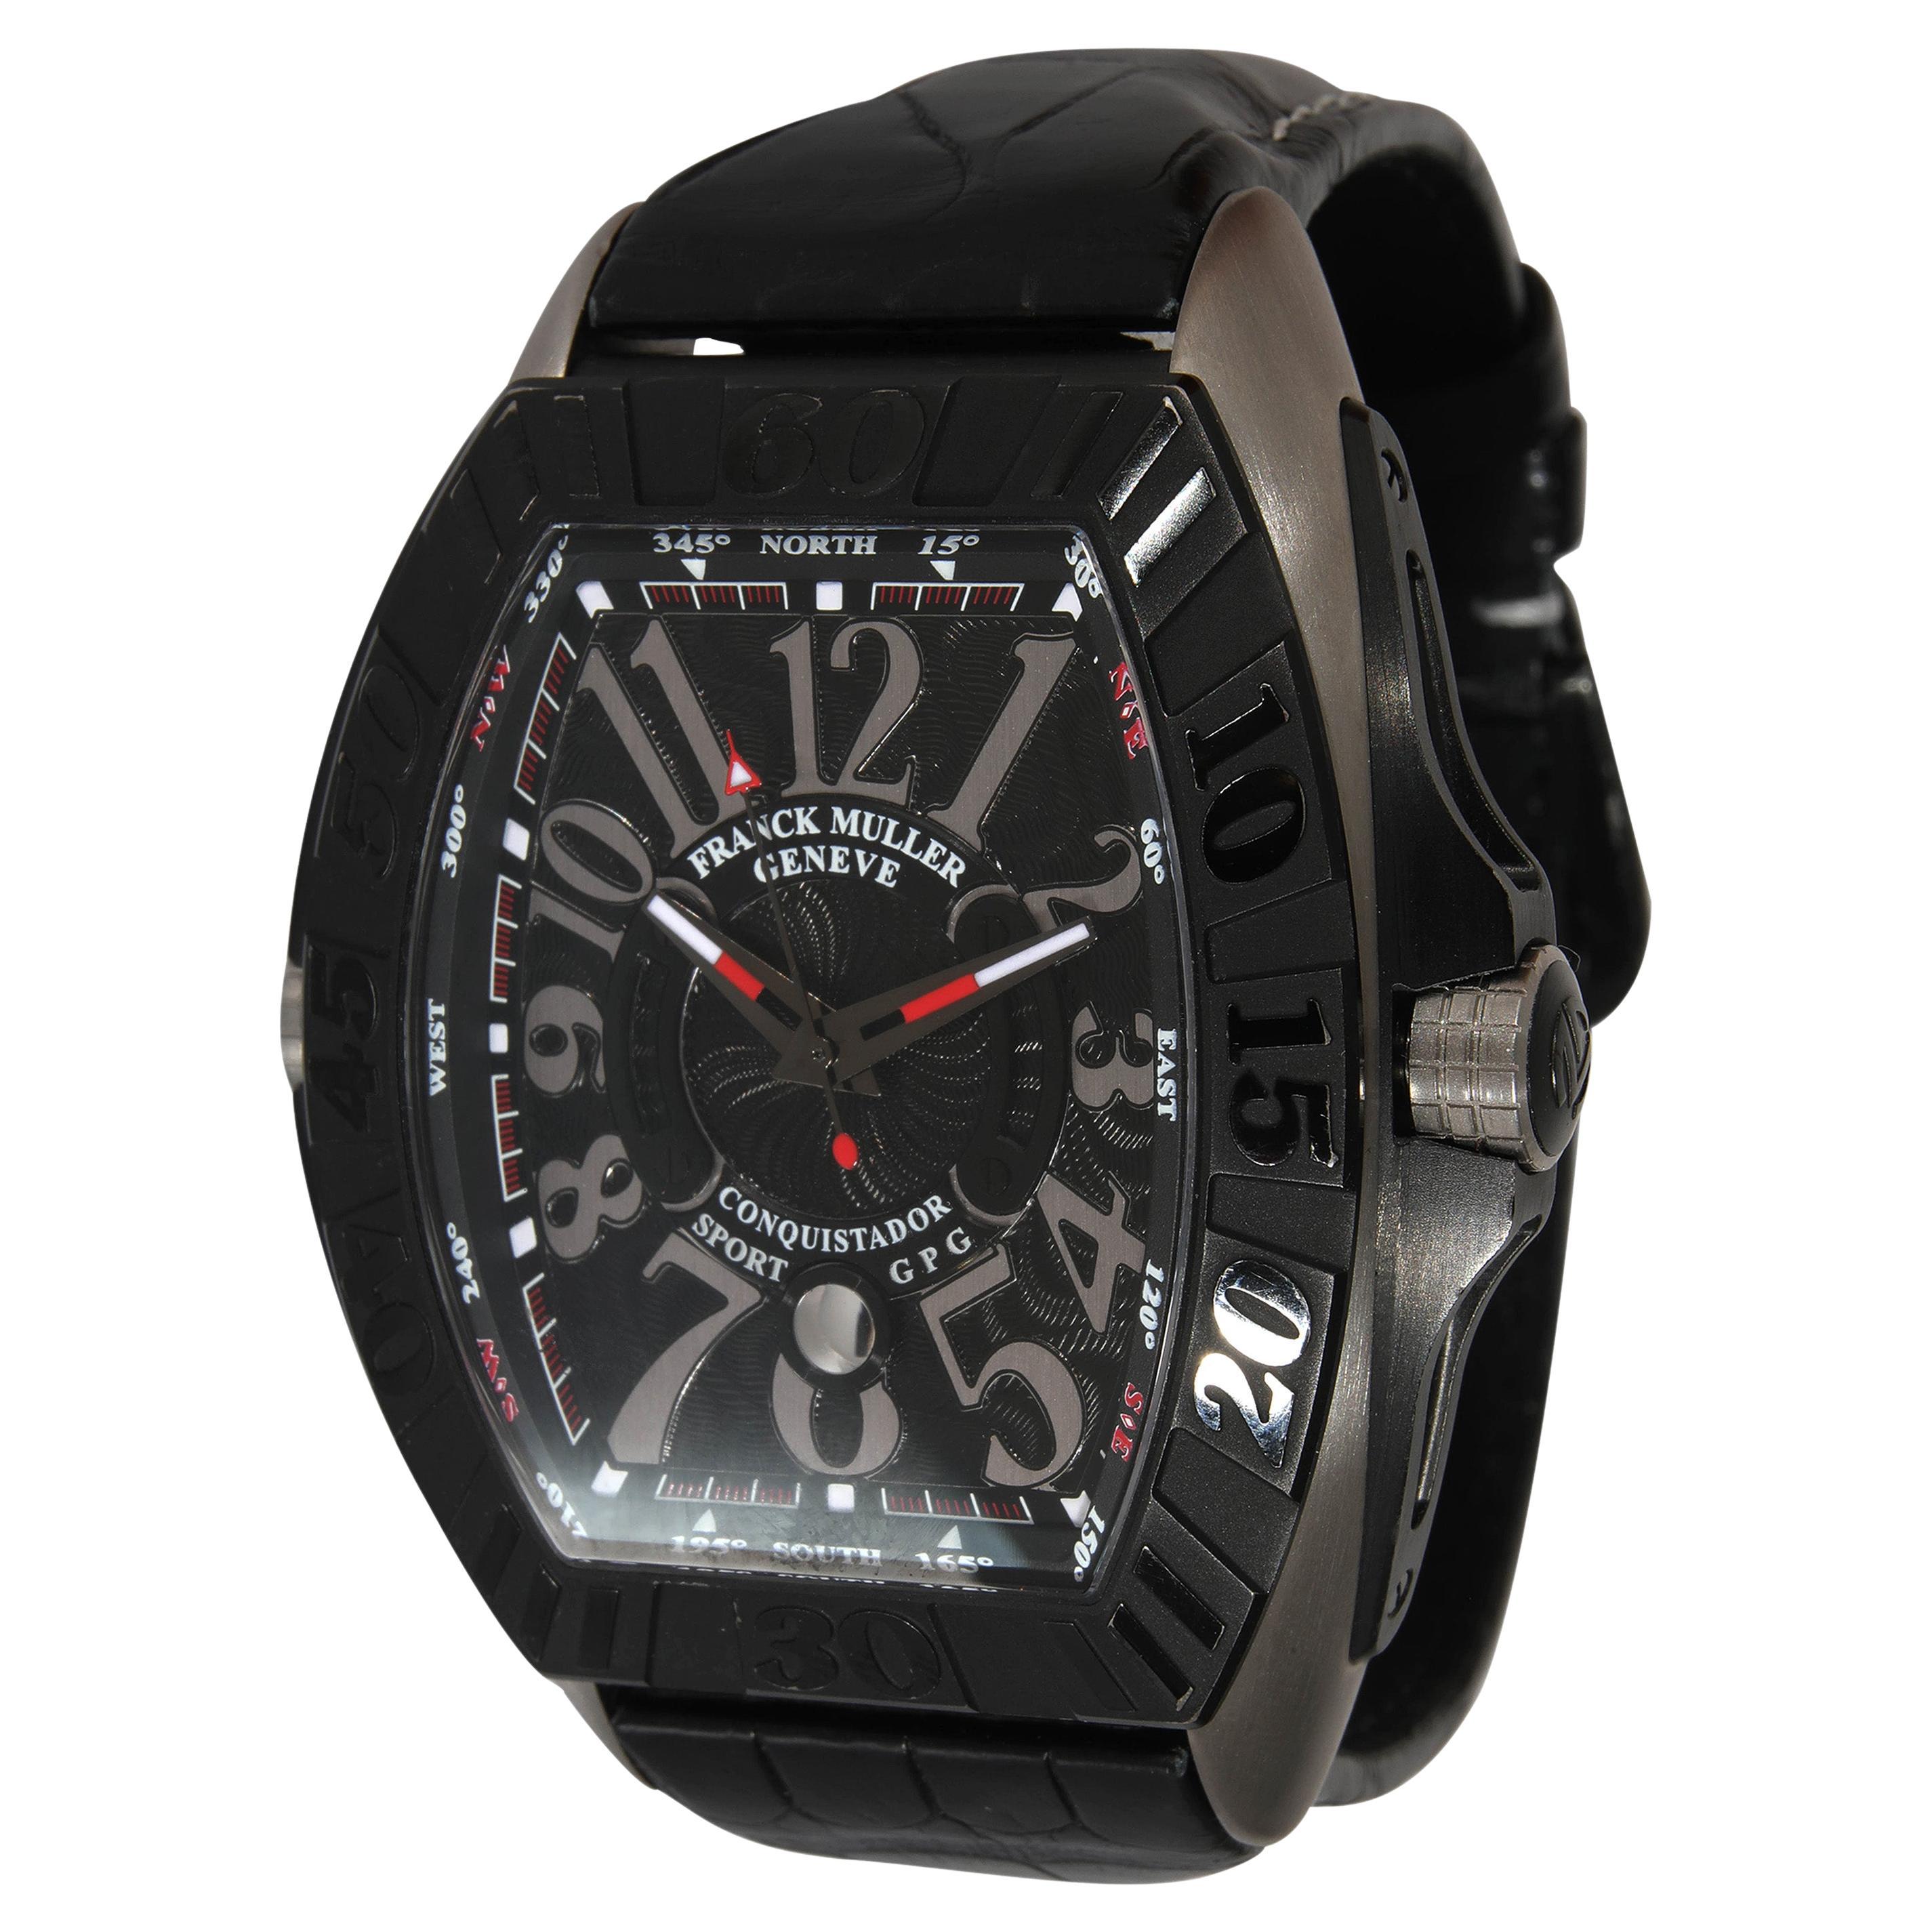 Franck Muller Conquistador Sport GPG 9900 SC DT GPG Men's Watch in Titanium